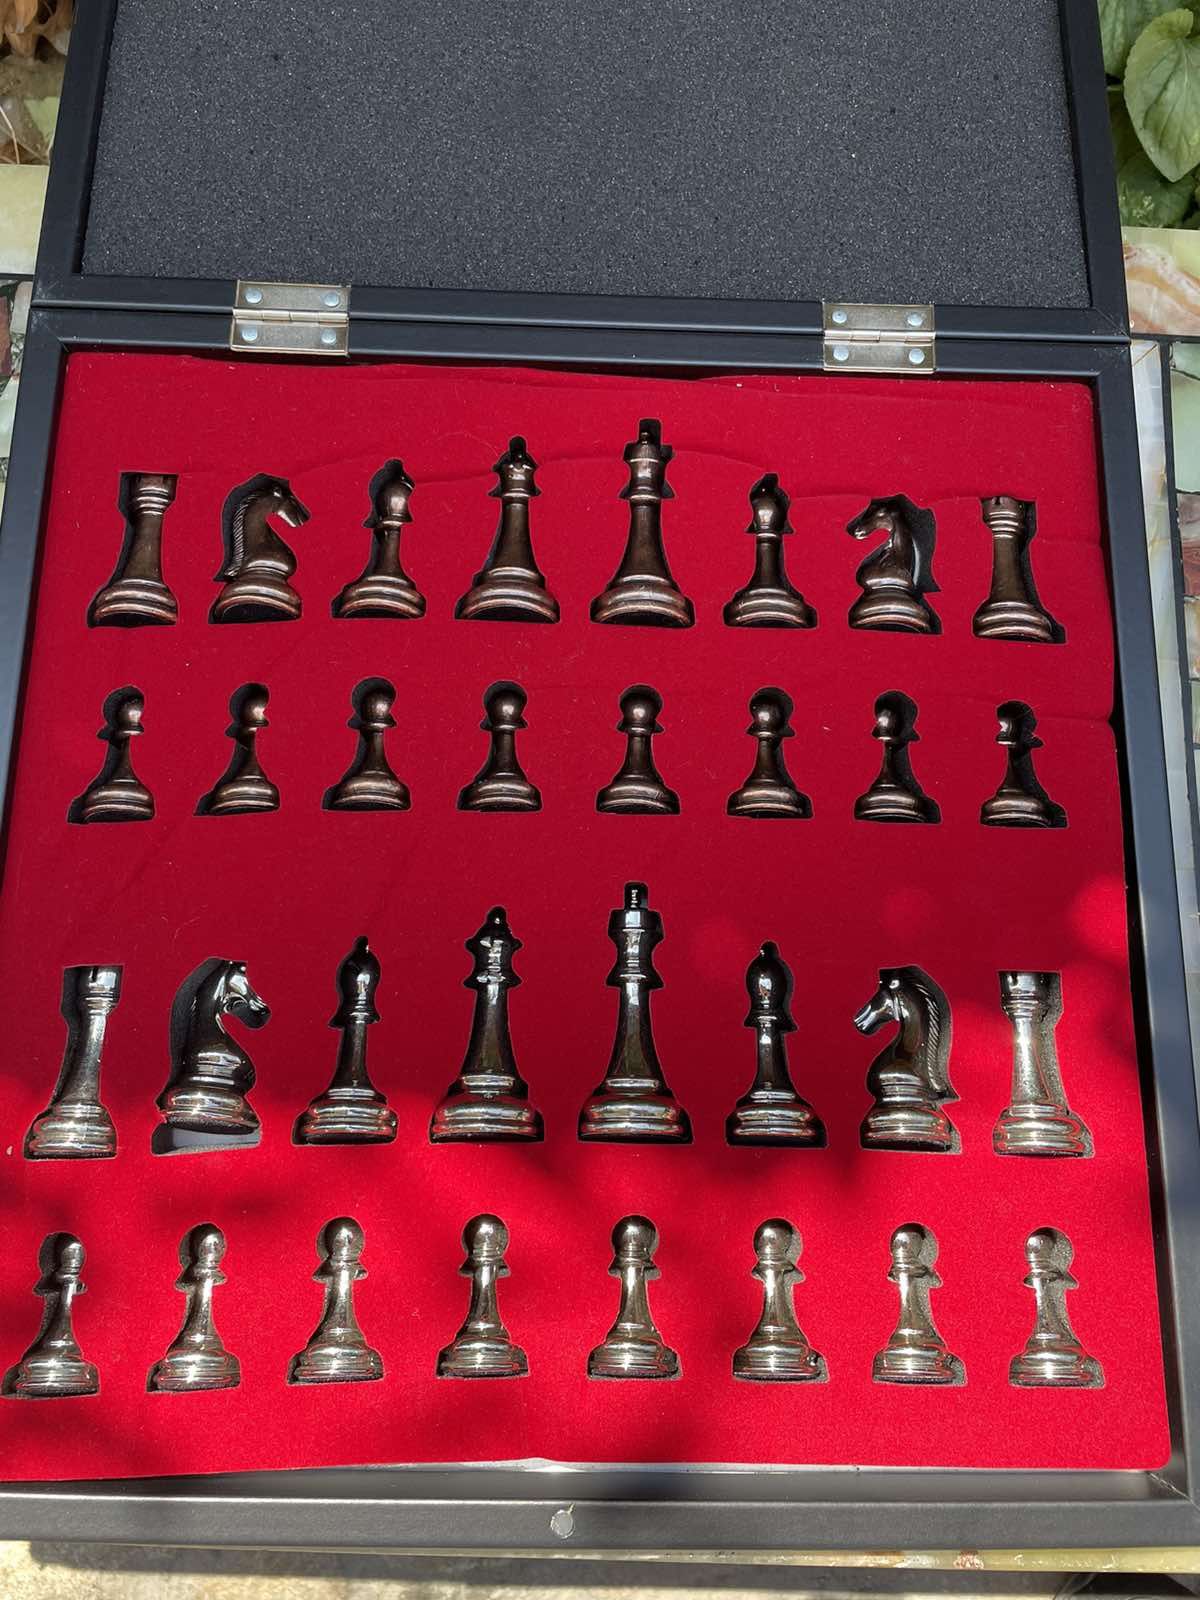 Луксозни шахове с златни и бронзови фигури